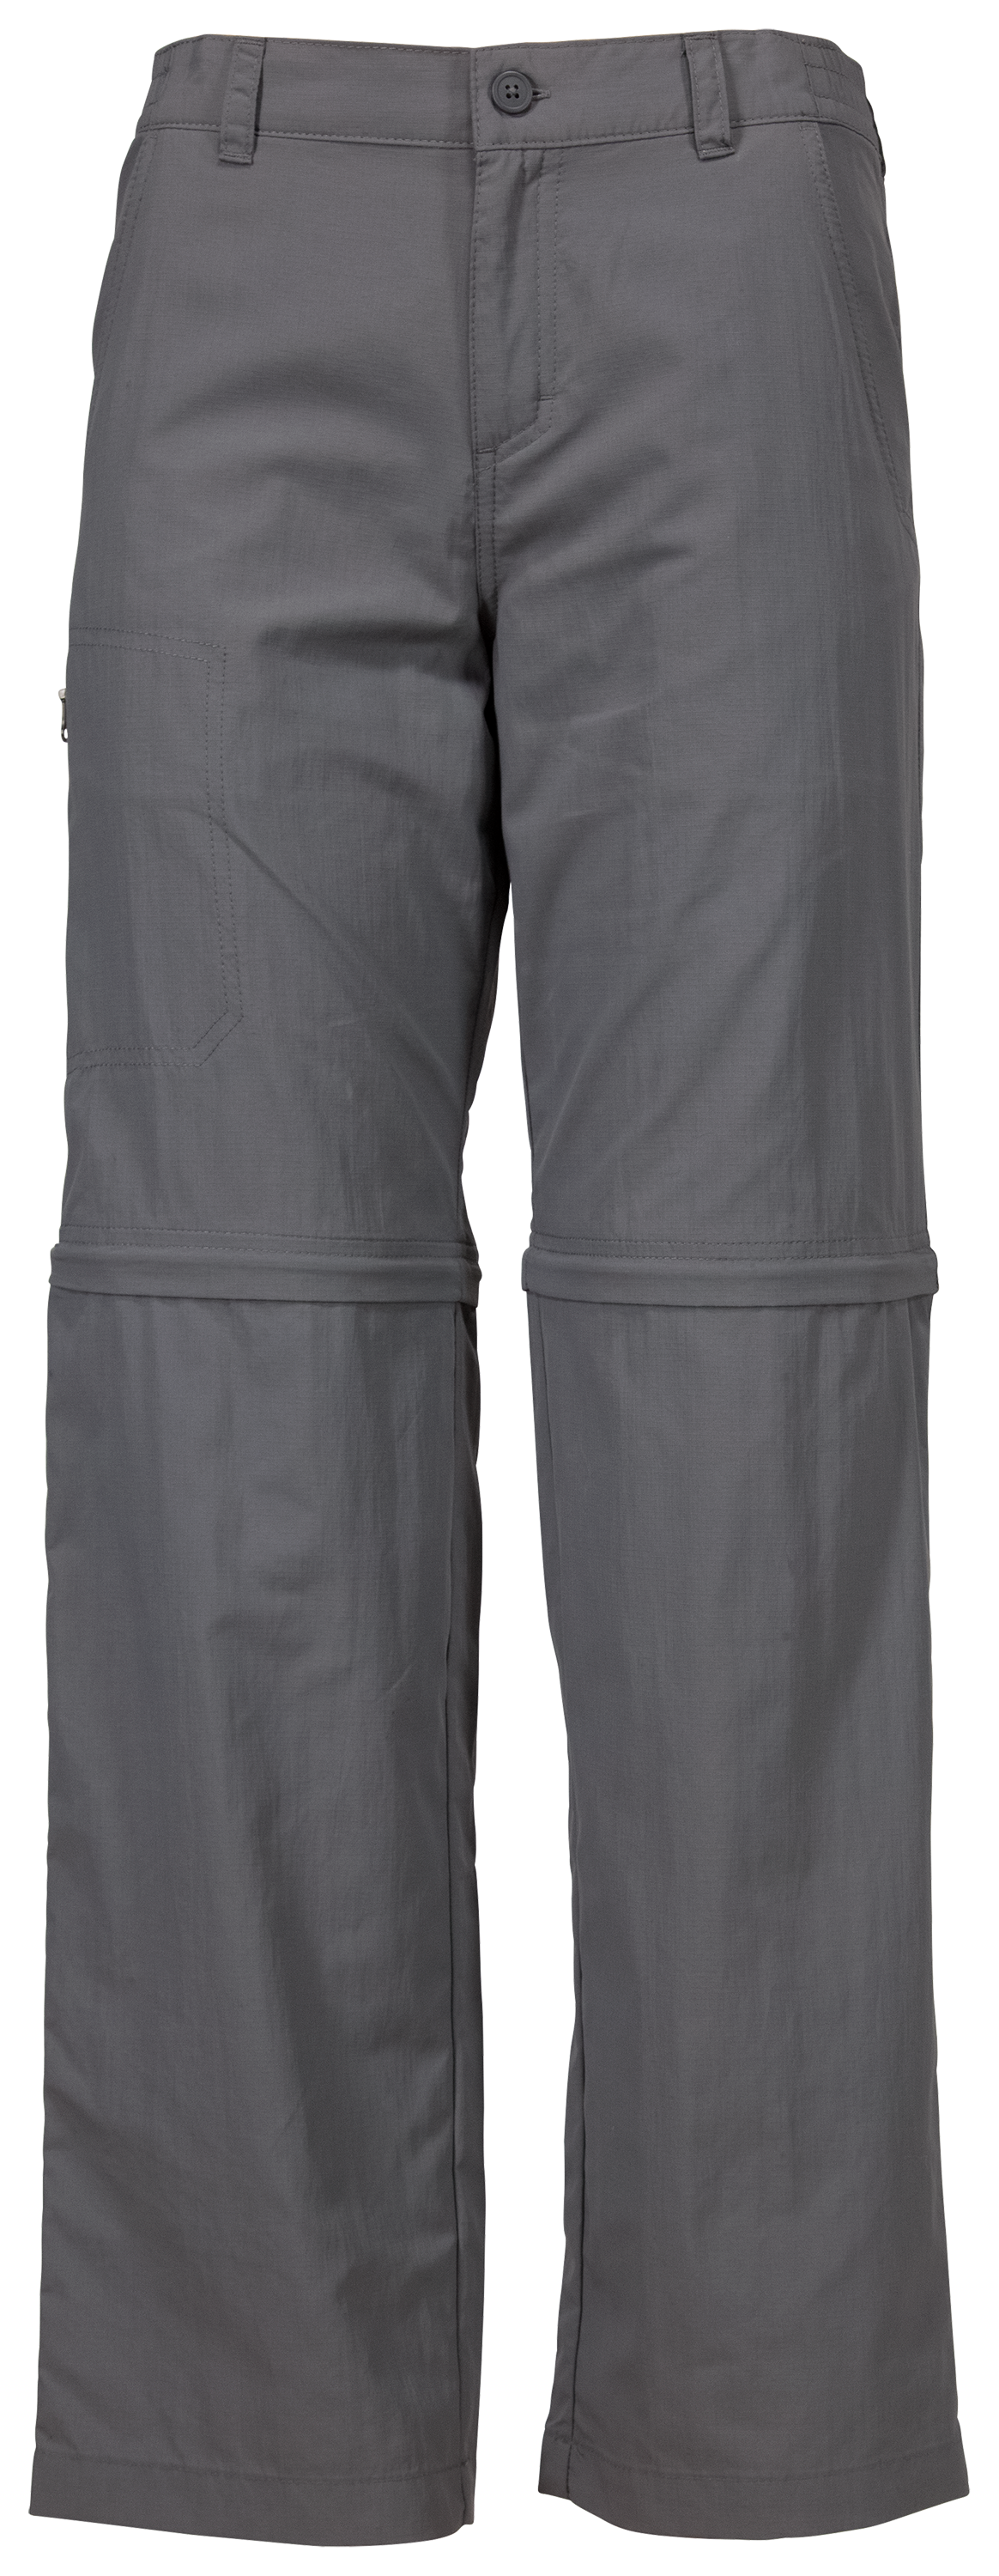 Columbia Silver Ridge IV Convertible Pants for Boys - City Grey - XS